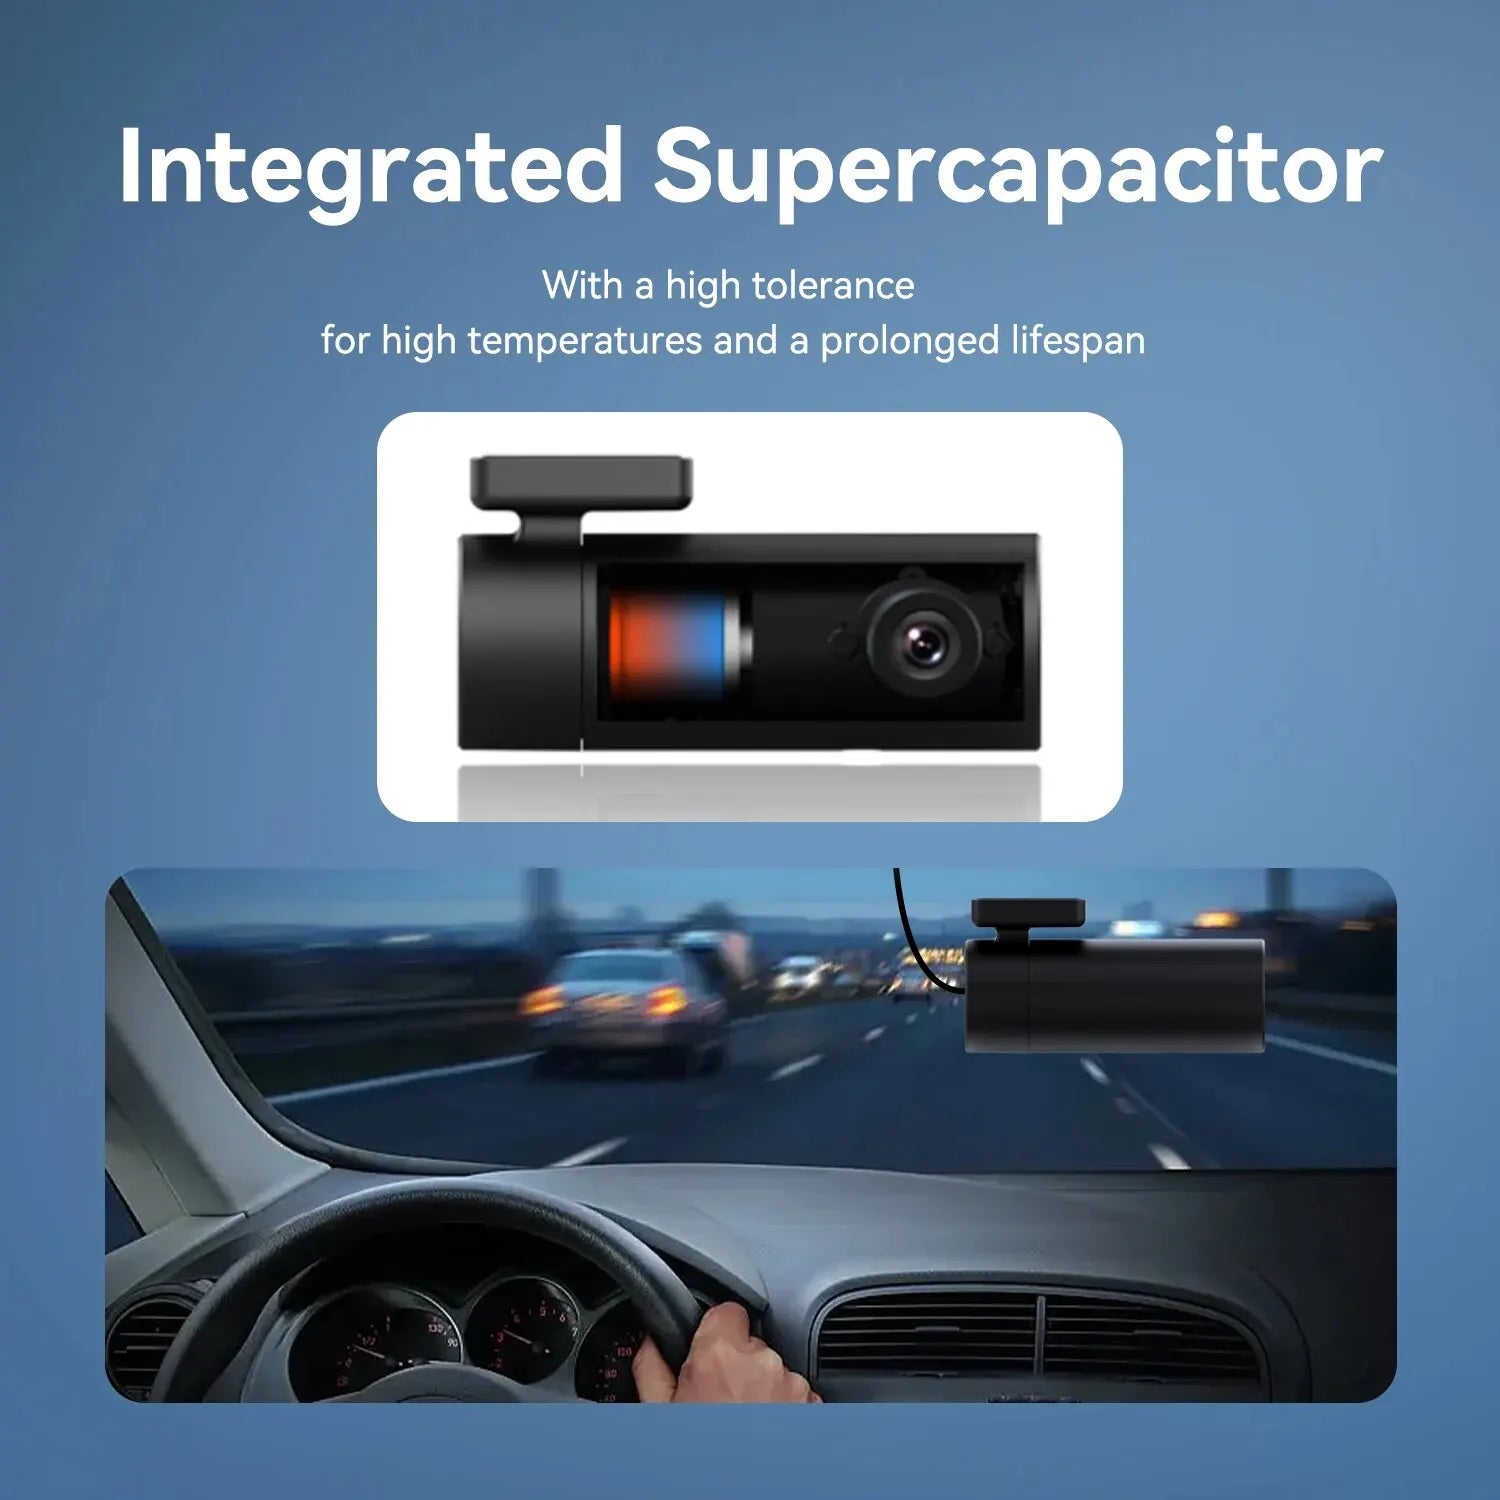 DDPAI Dash Cam Mini Pro 1296P Ultra HD Vehicle Wi-Fi Smart Connect Car Camera - Supersell